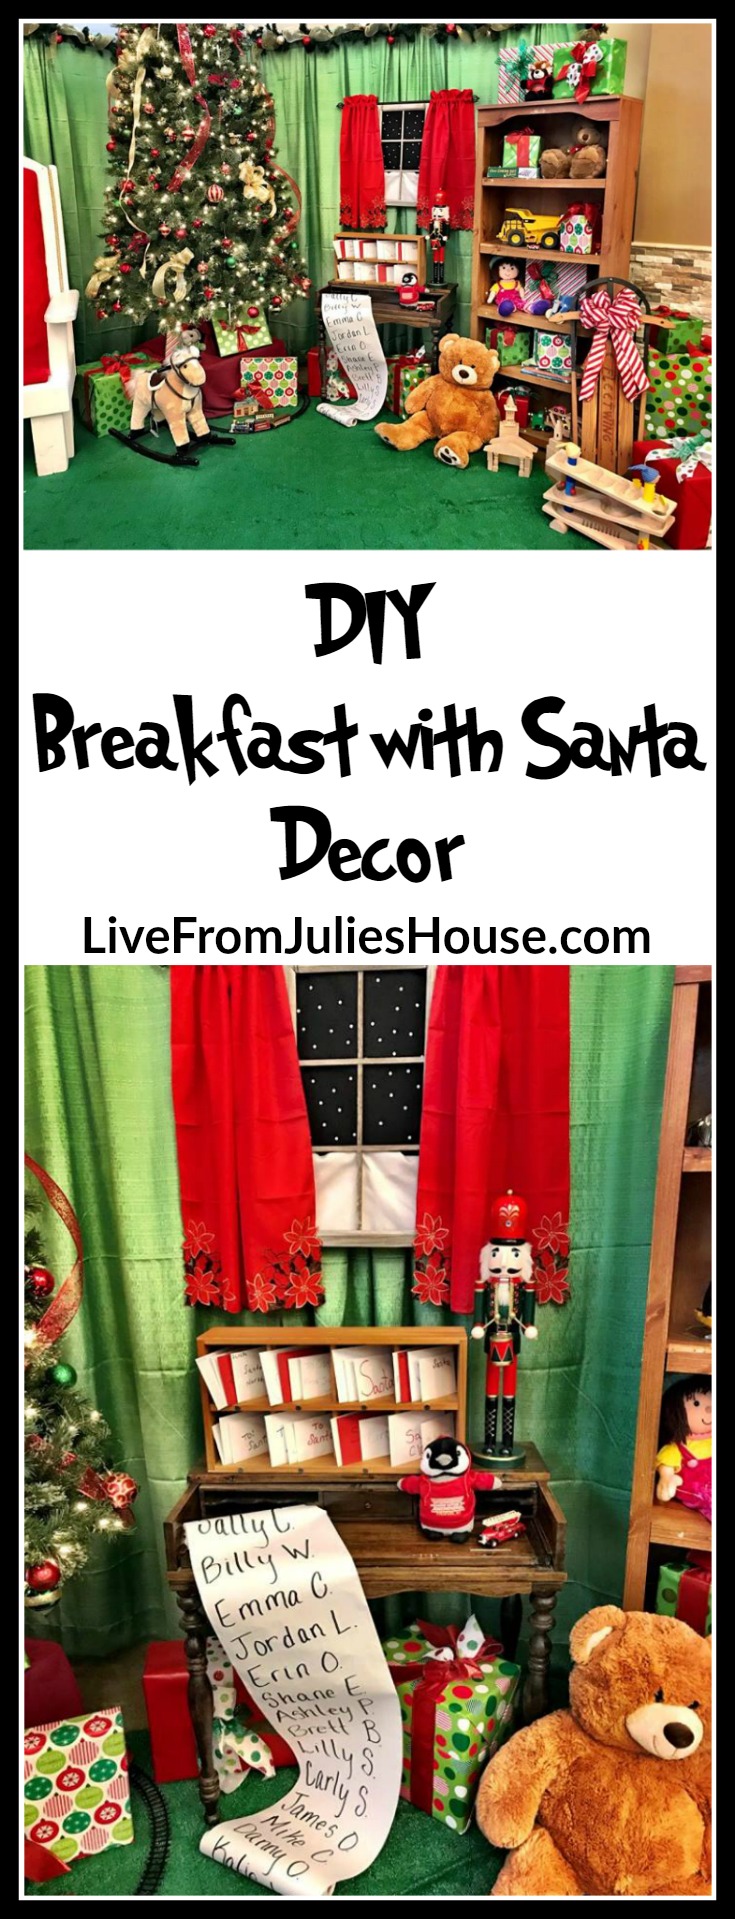 DIY Breakfast with Santa Decor